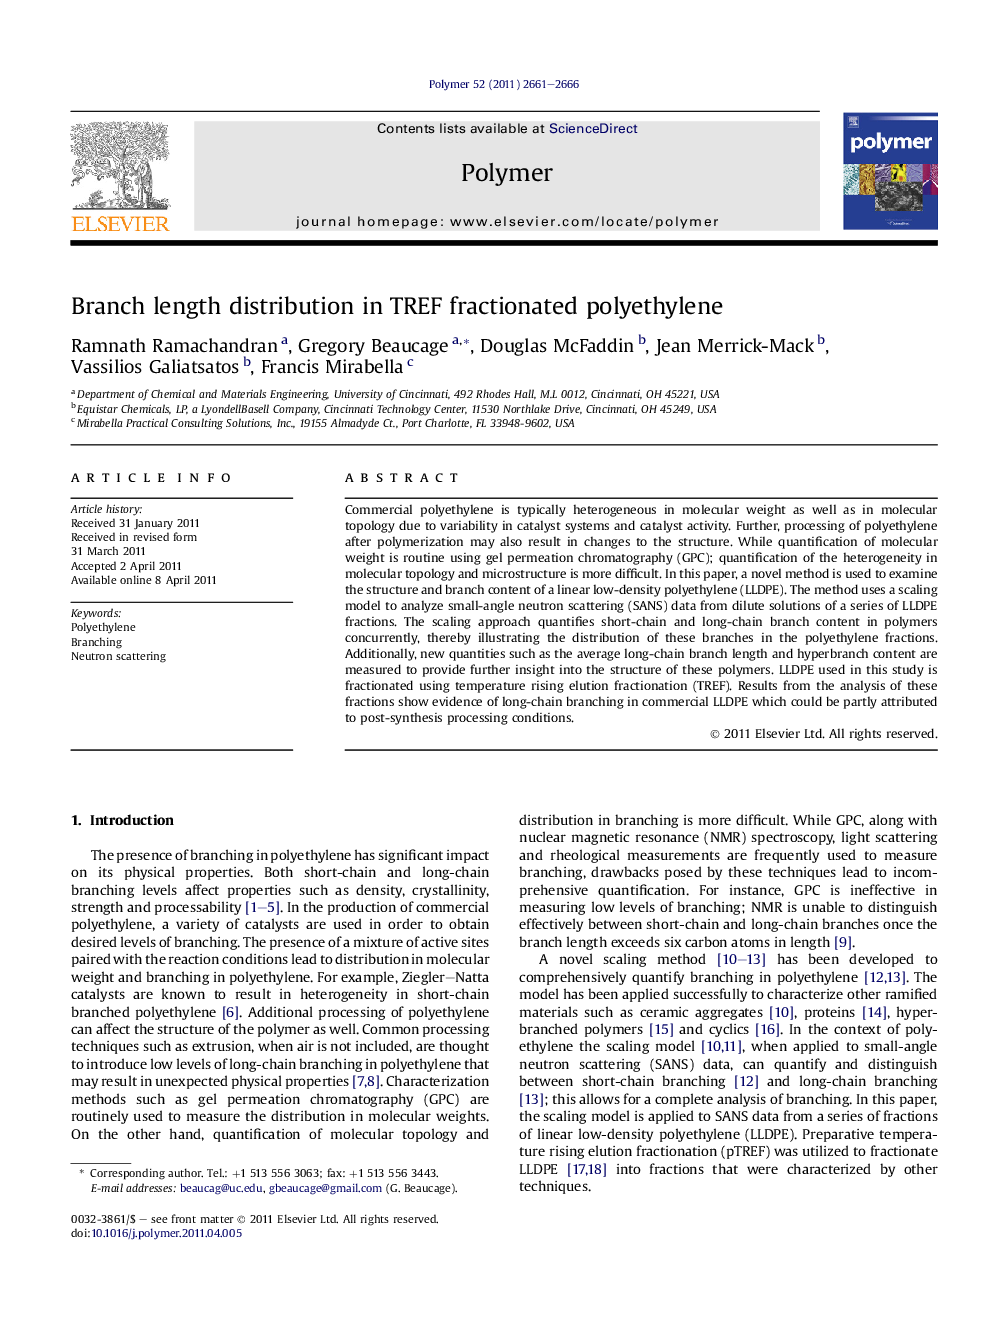 Branch length distribution in TREF fractionated polyethylene